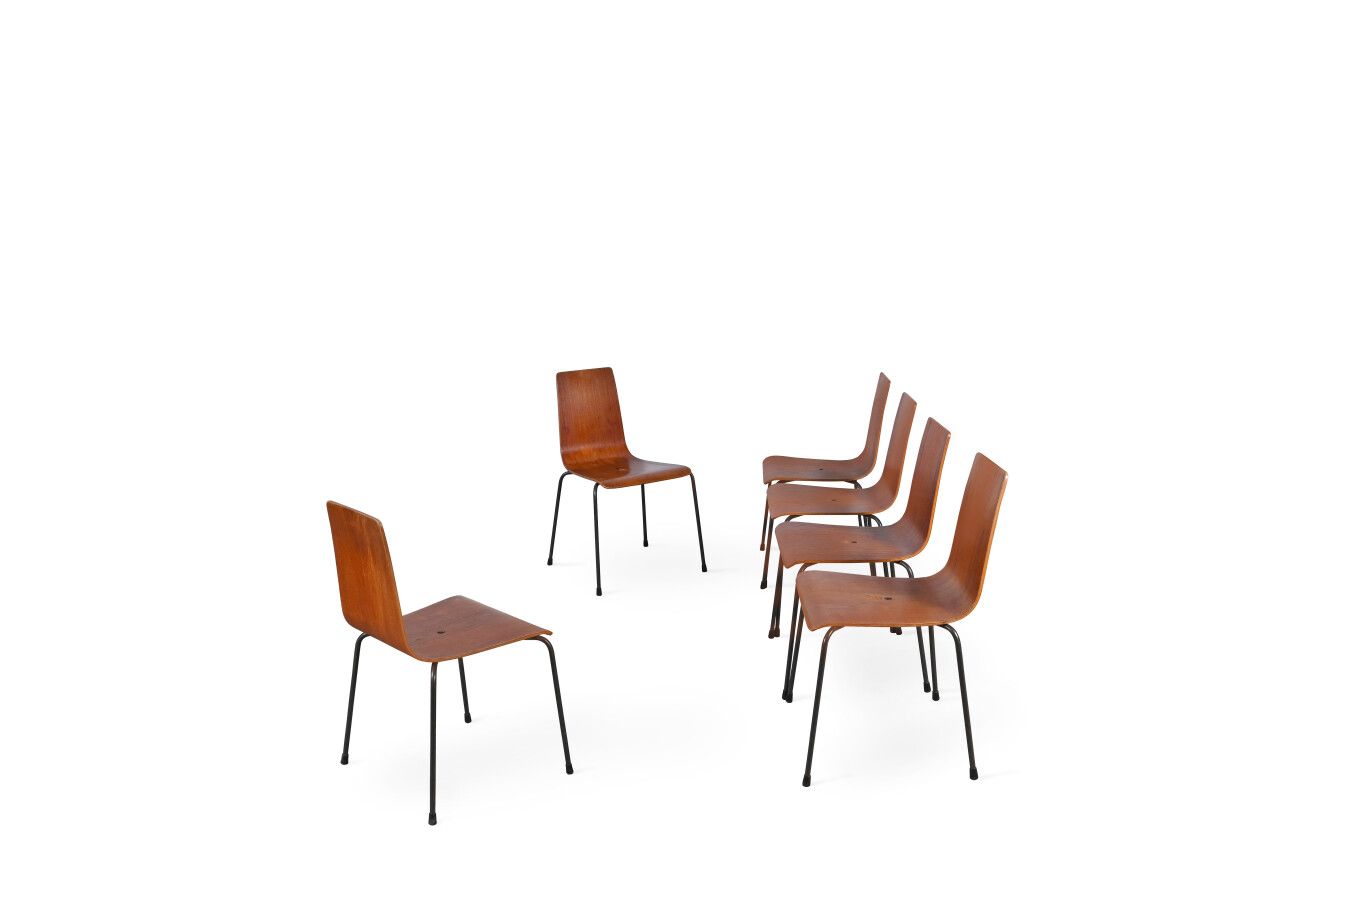 Null 60年代的工作

六把椅子的套间

模制胶合板，黑色漆面铁腿

H.81 cm - D. 48 cm - W. 49 cm

使用条件